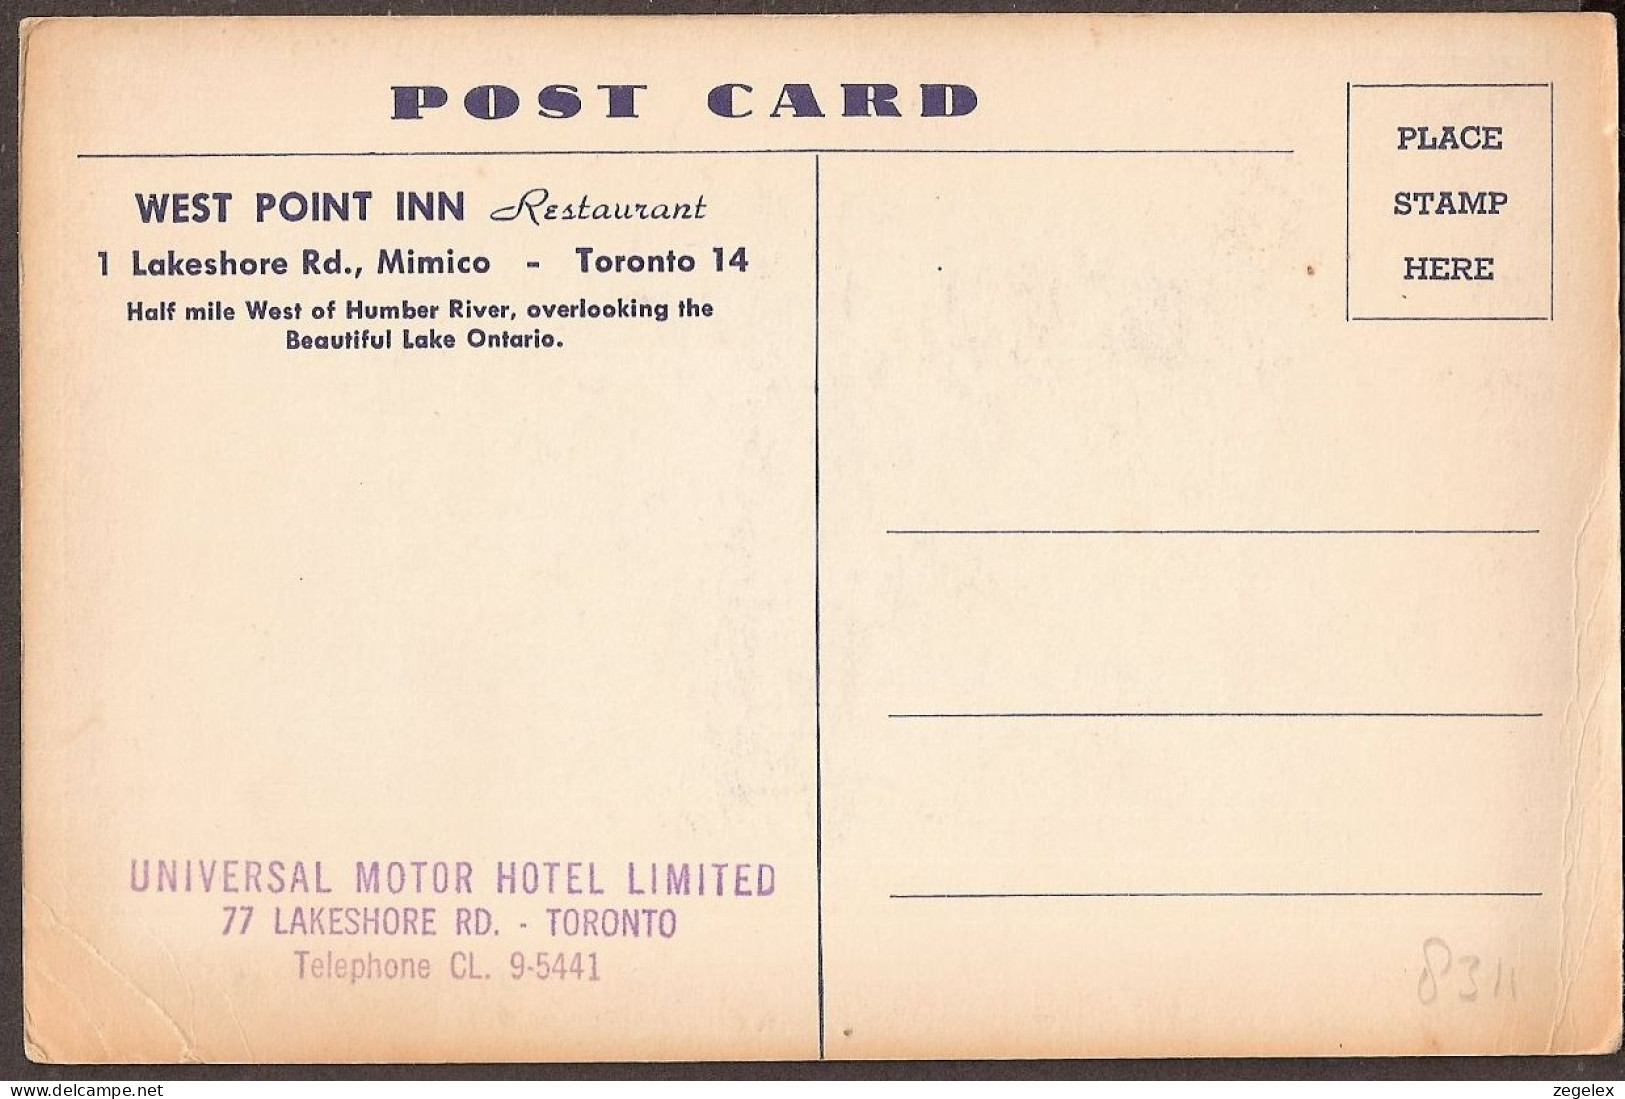 Toronto - West Point Inn Restaurant - Lakeshore Road, Mimico - Universal Motor Hotel Ltd. - Toronto